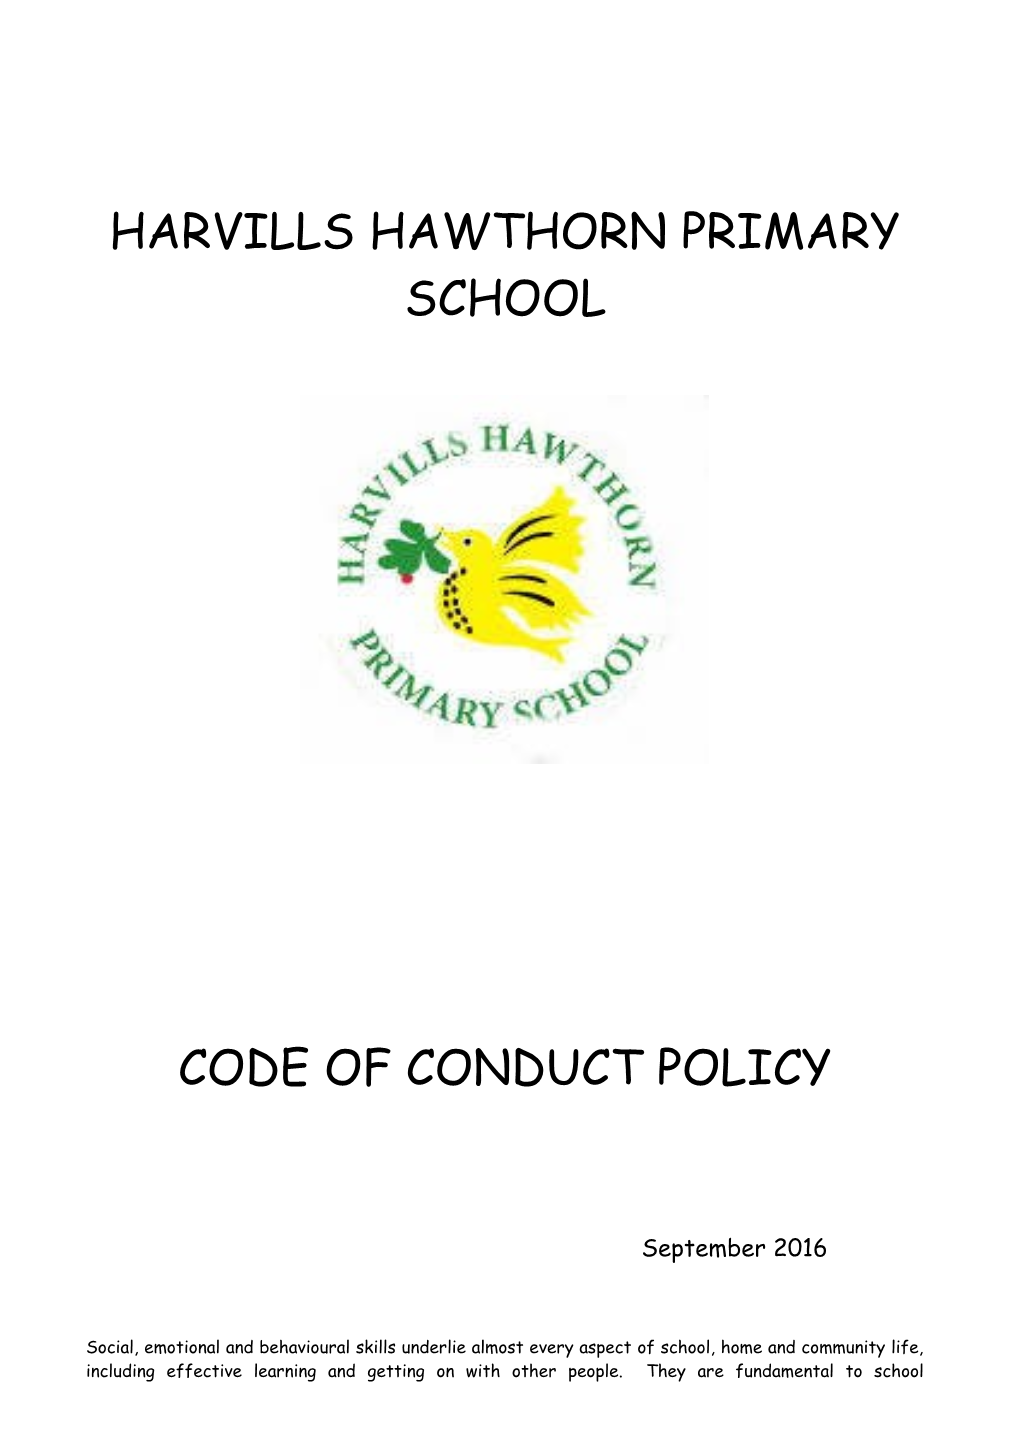 Harvills Hawthorn Primary School